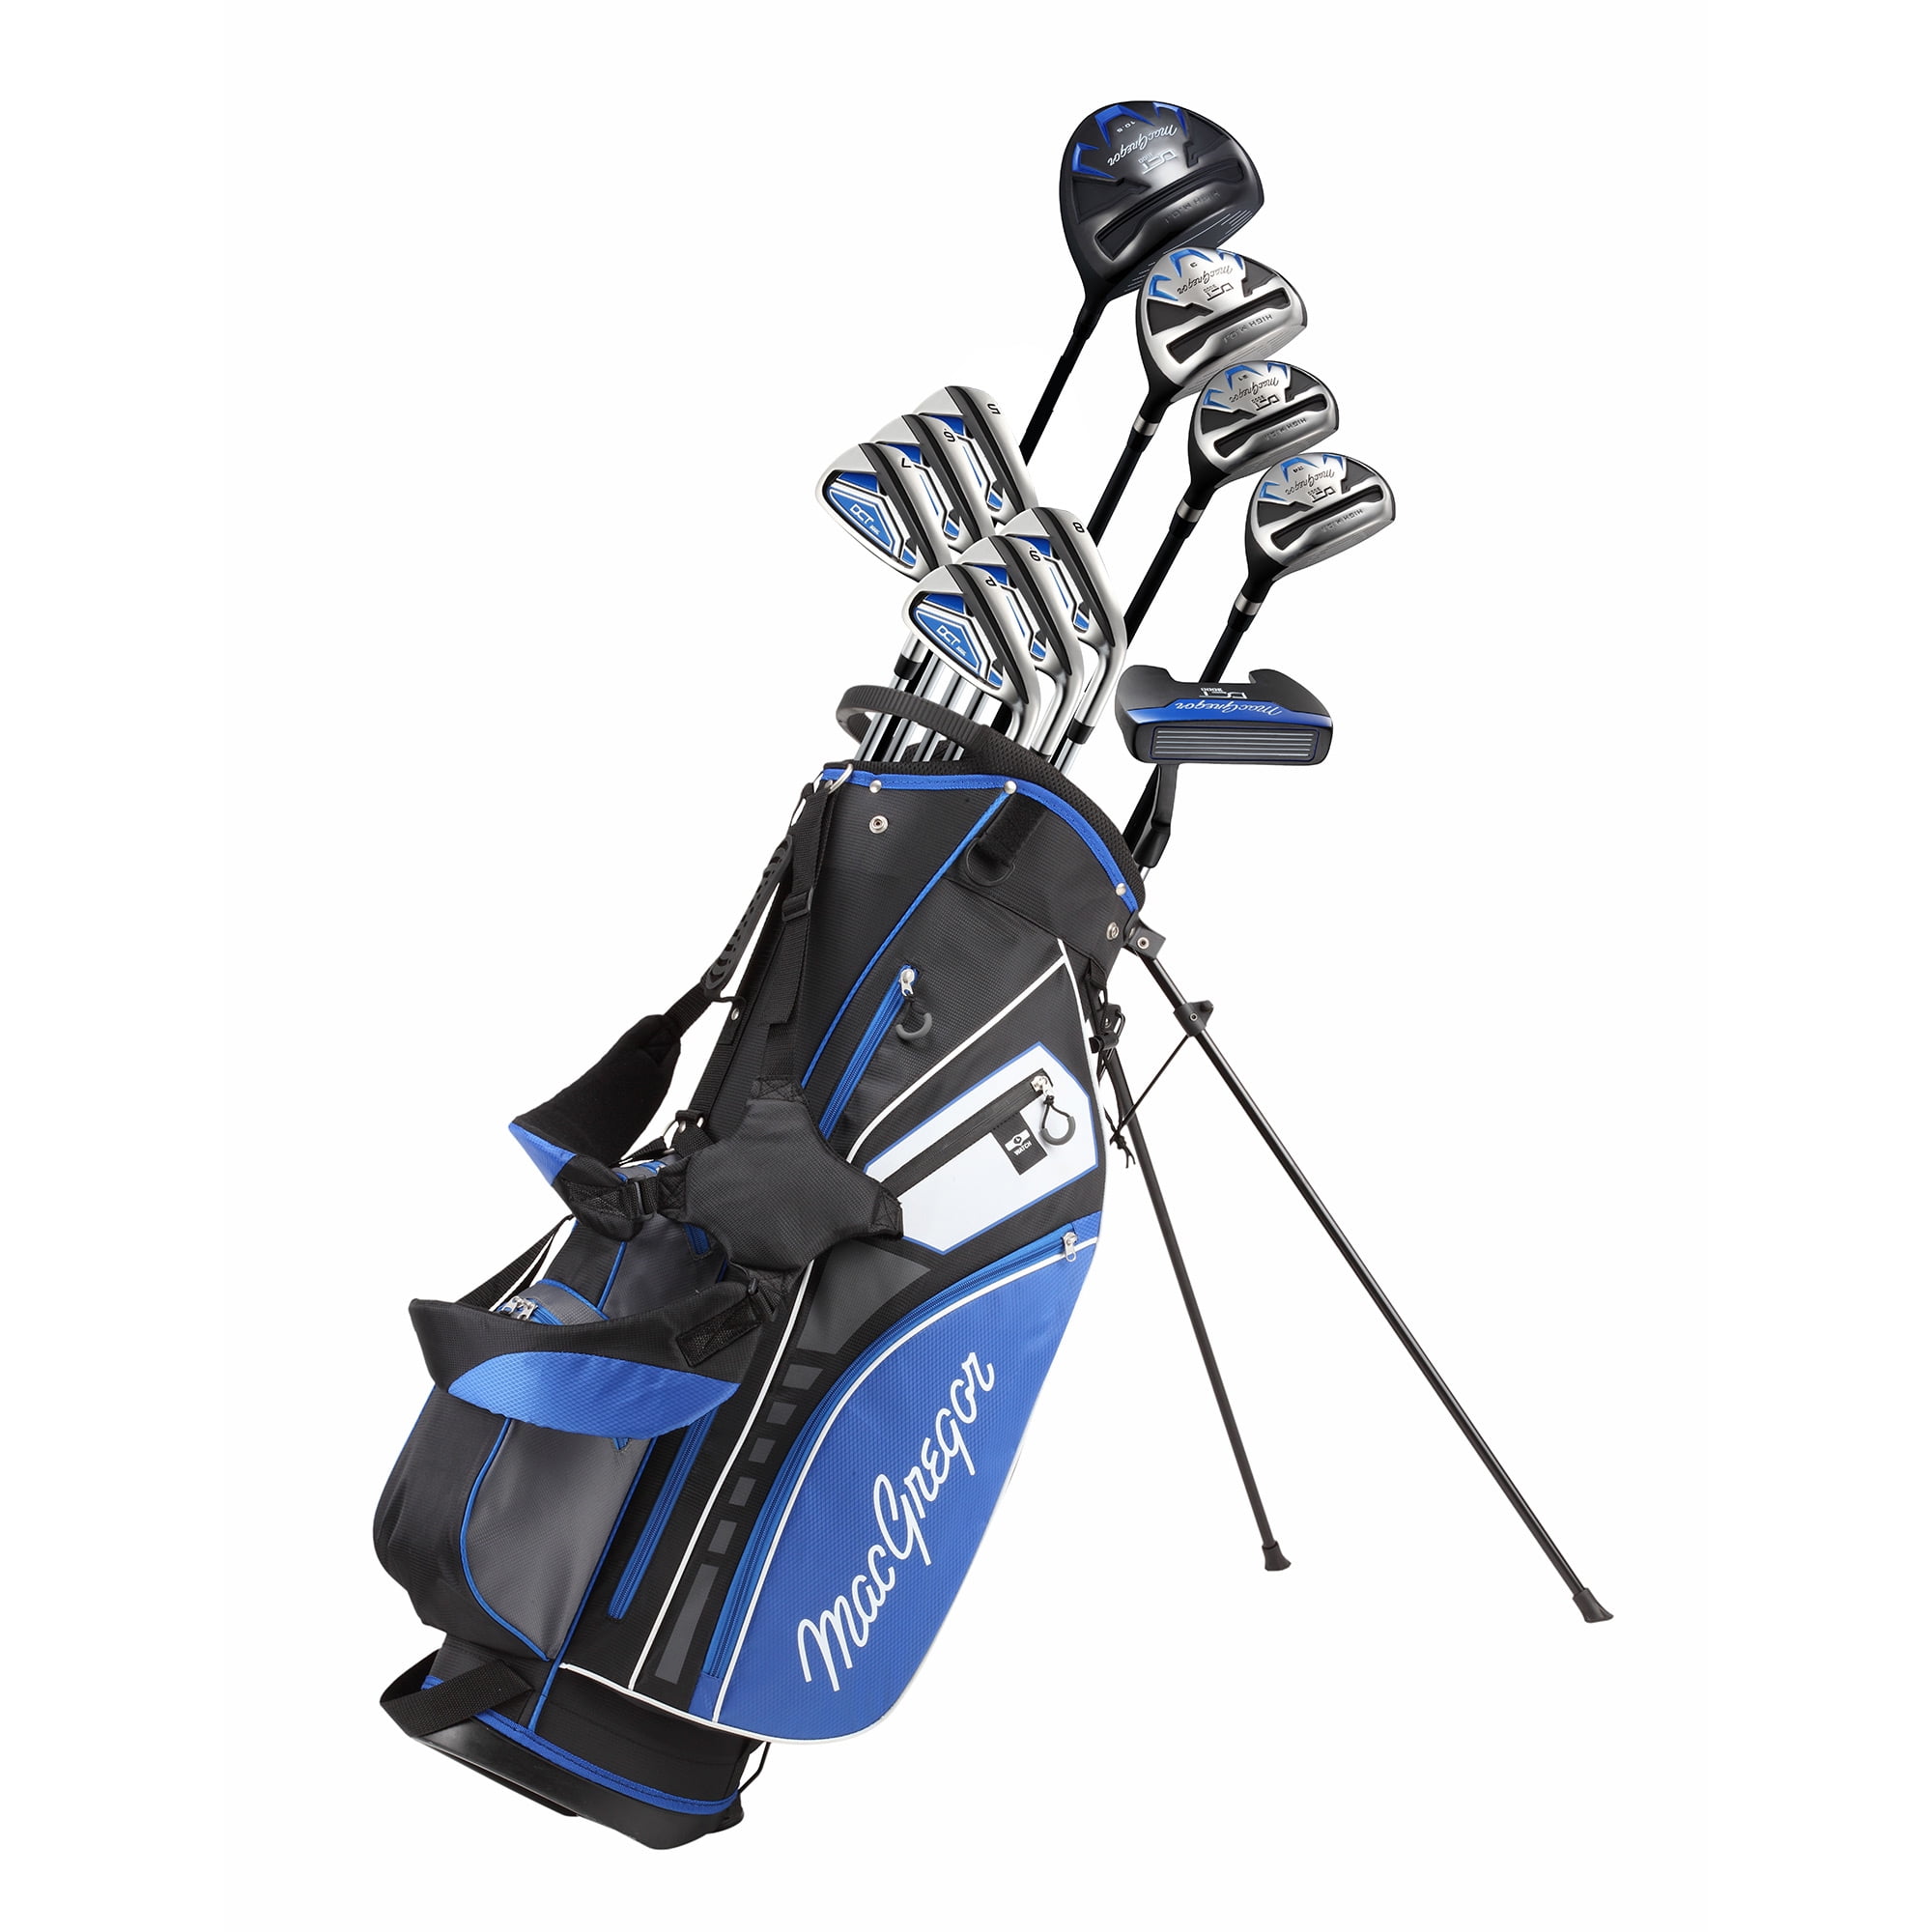 MacGregor Golf CG3000 Golf Clubs Set with Bag, Mens Left Hand